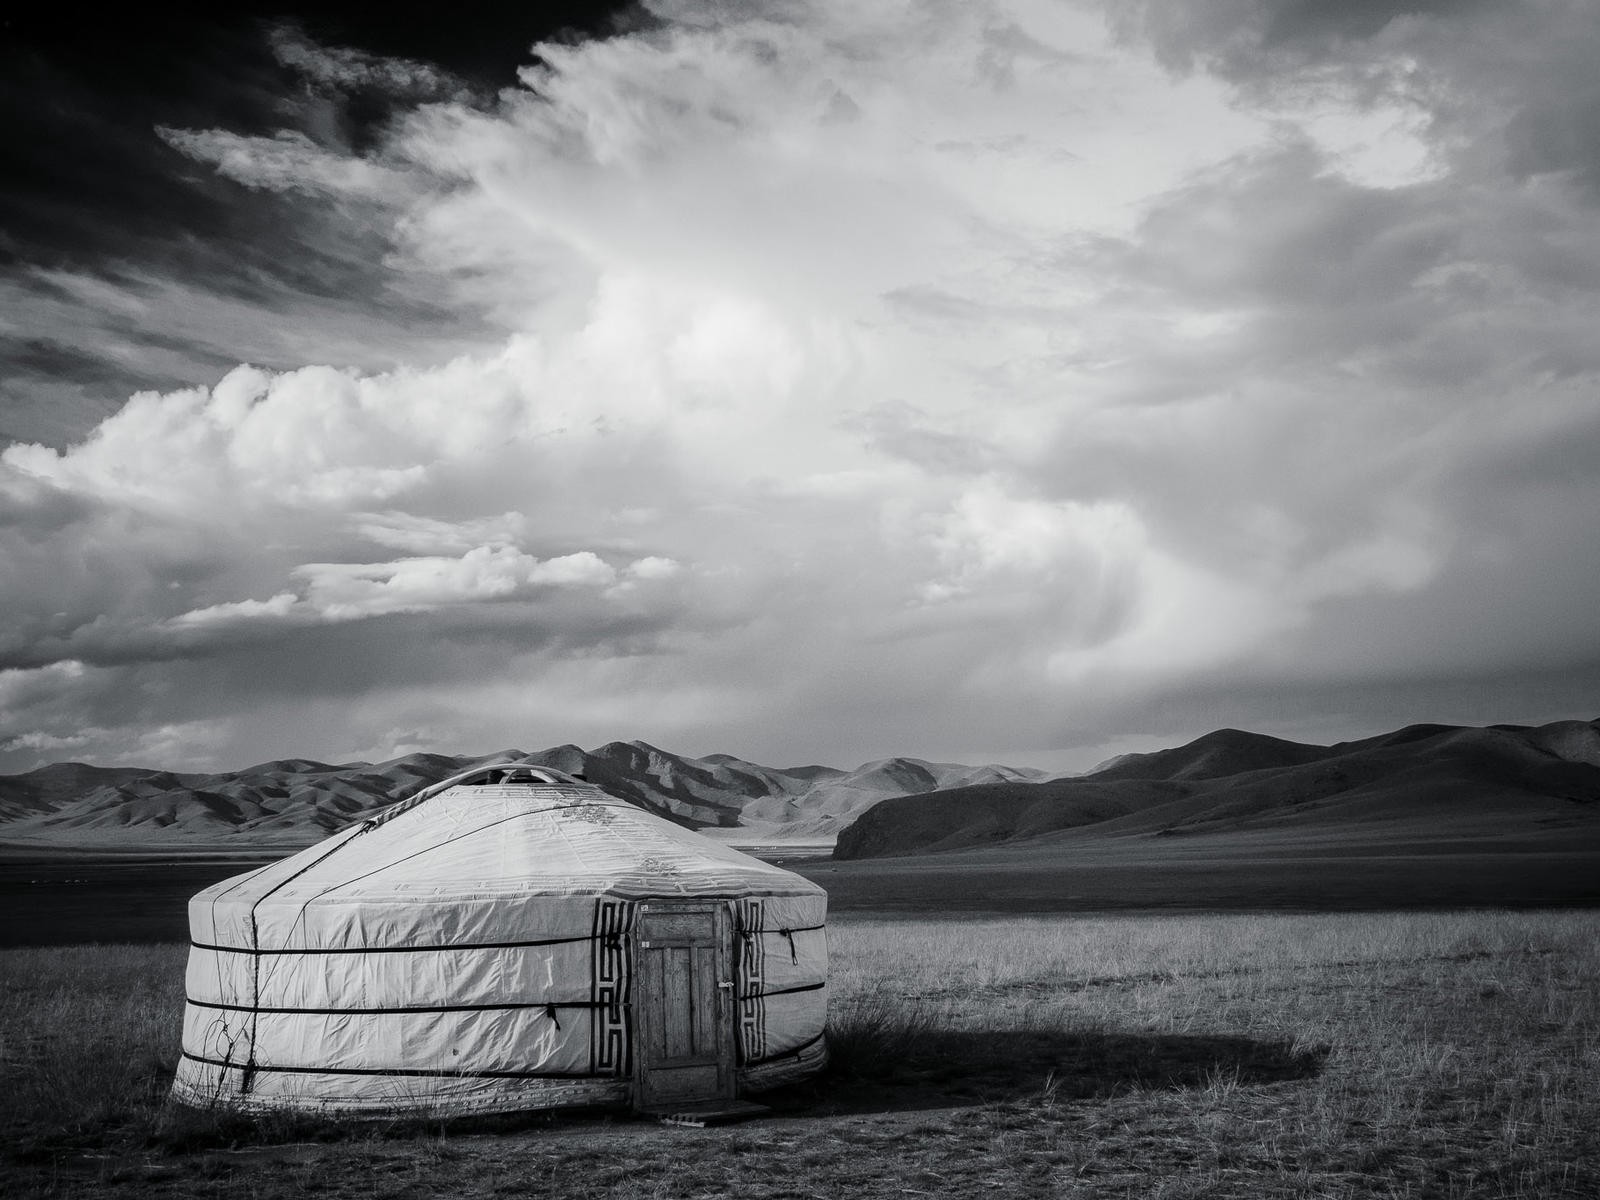 A yurt in rural Mongolia.